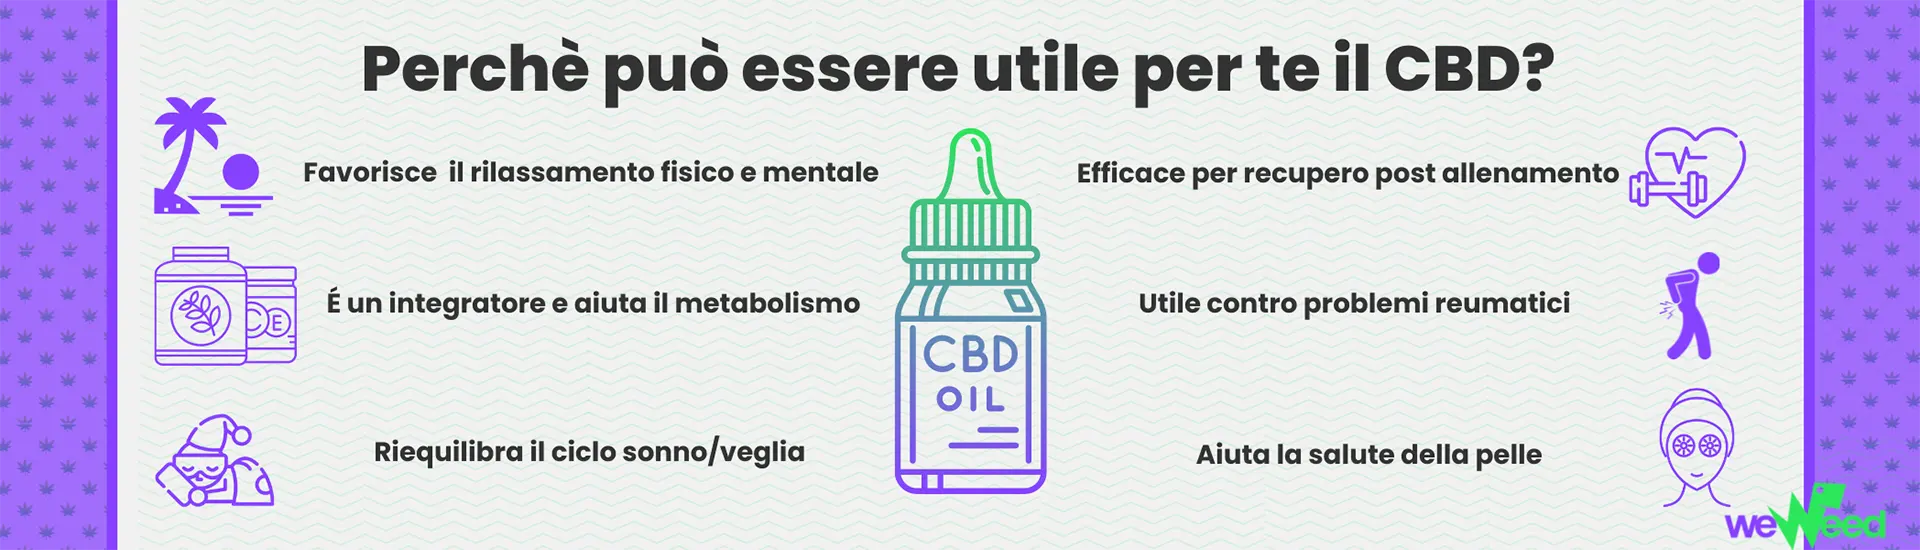 benefici-olio-cannabis